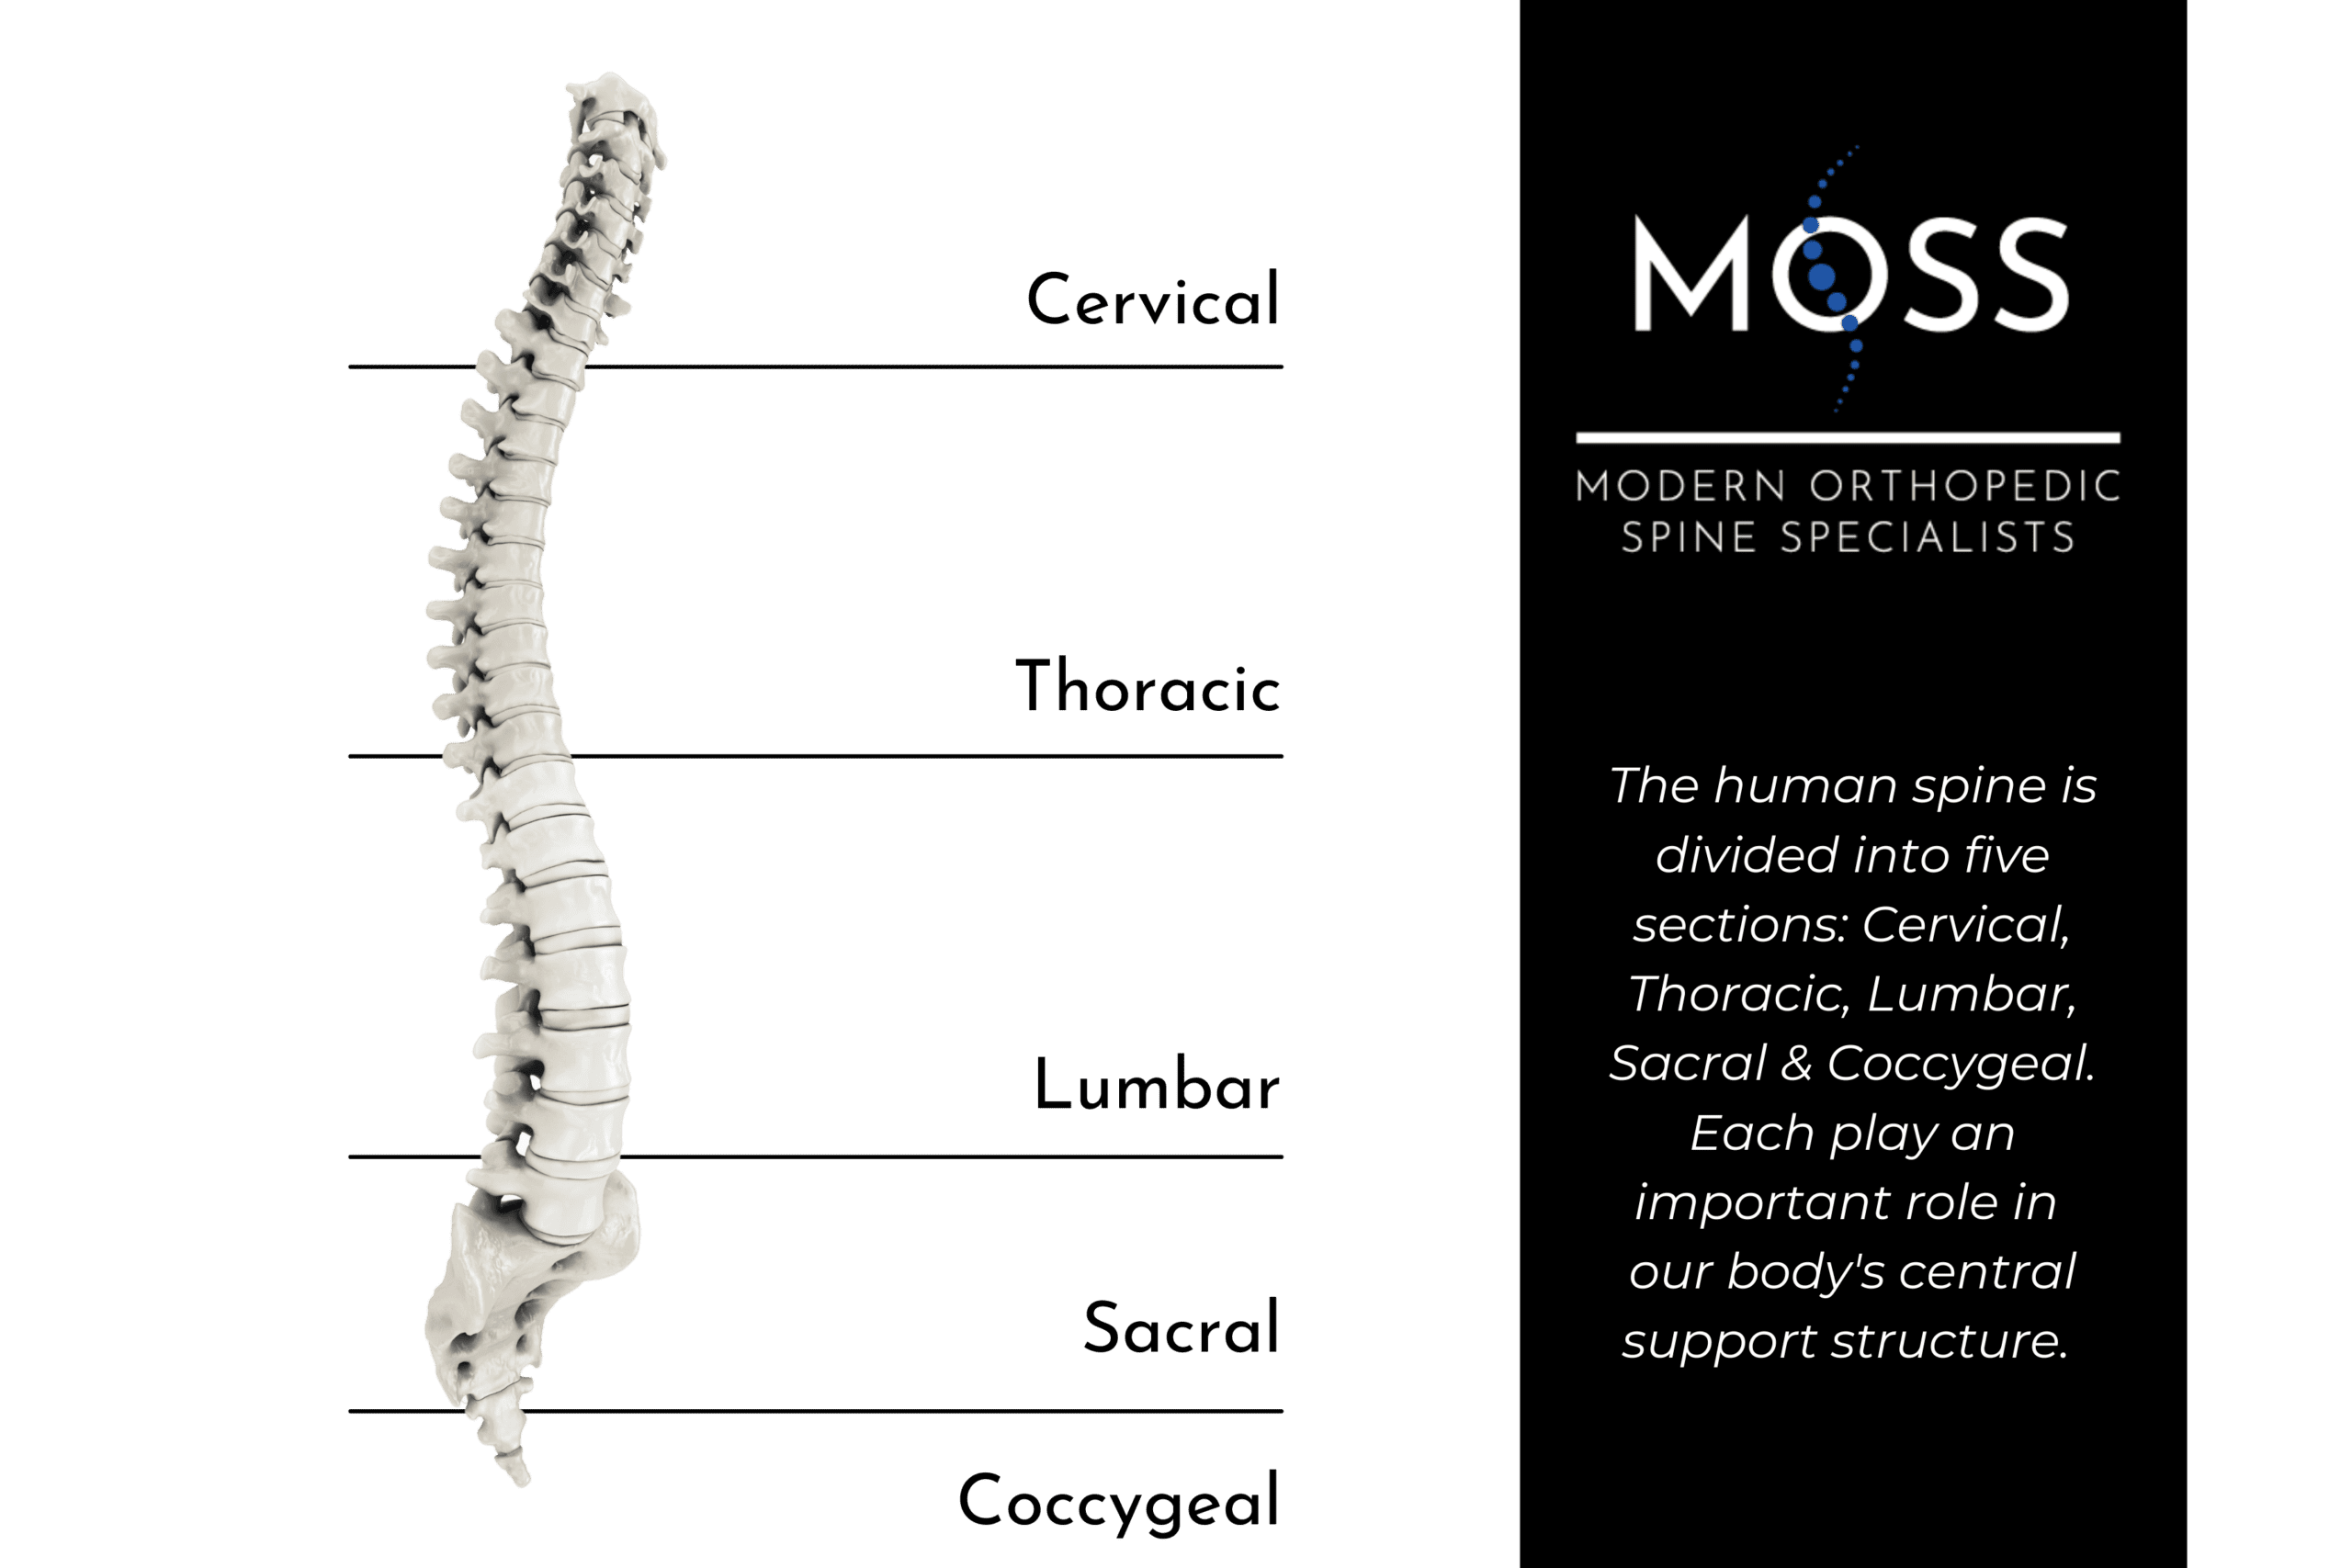 MOSS Spine